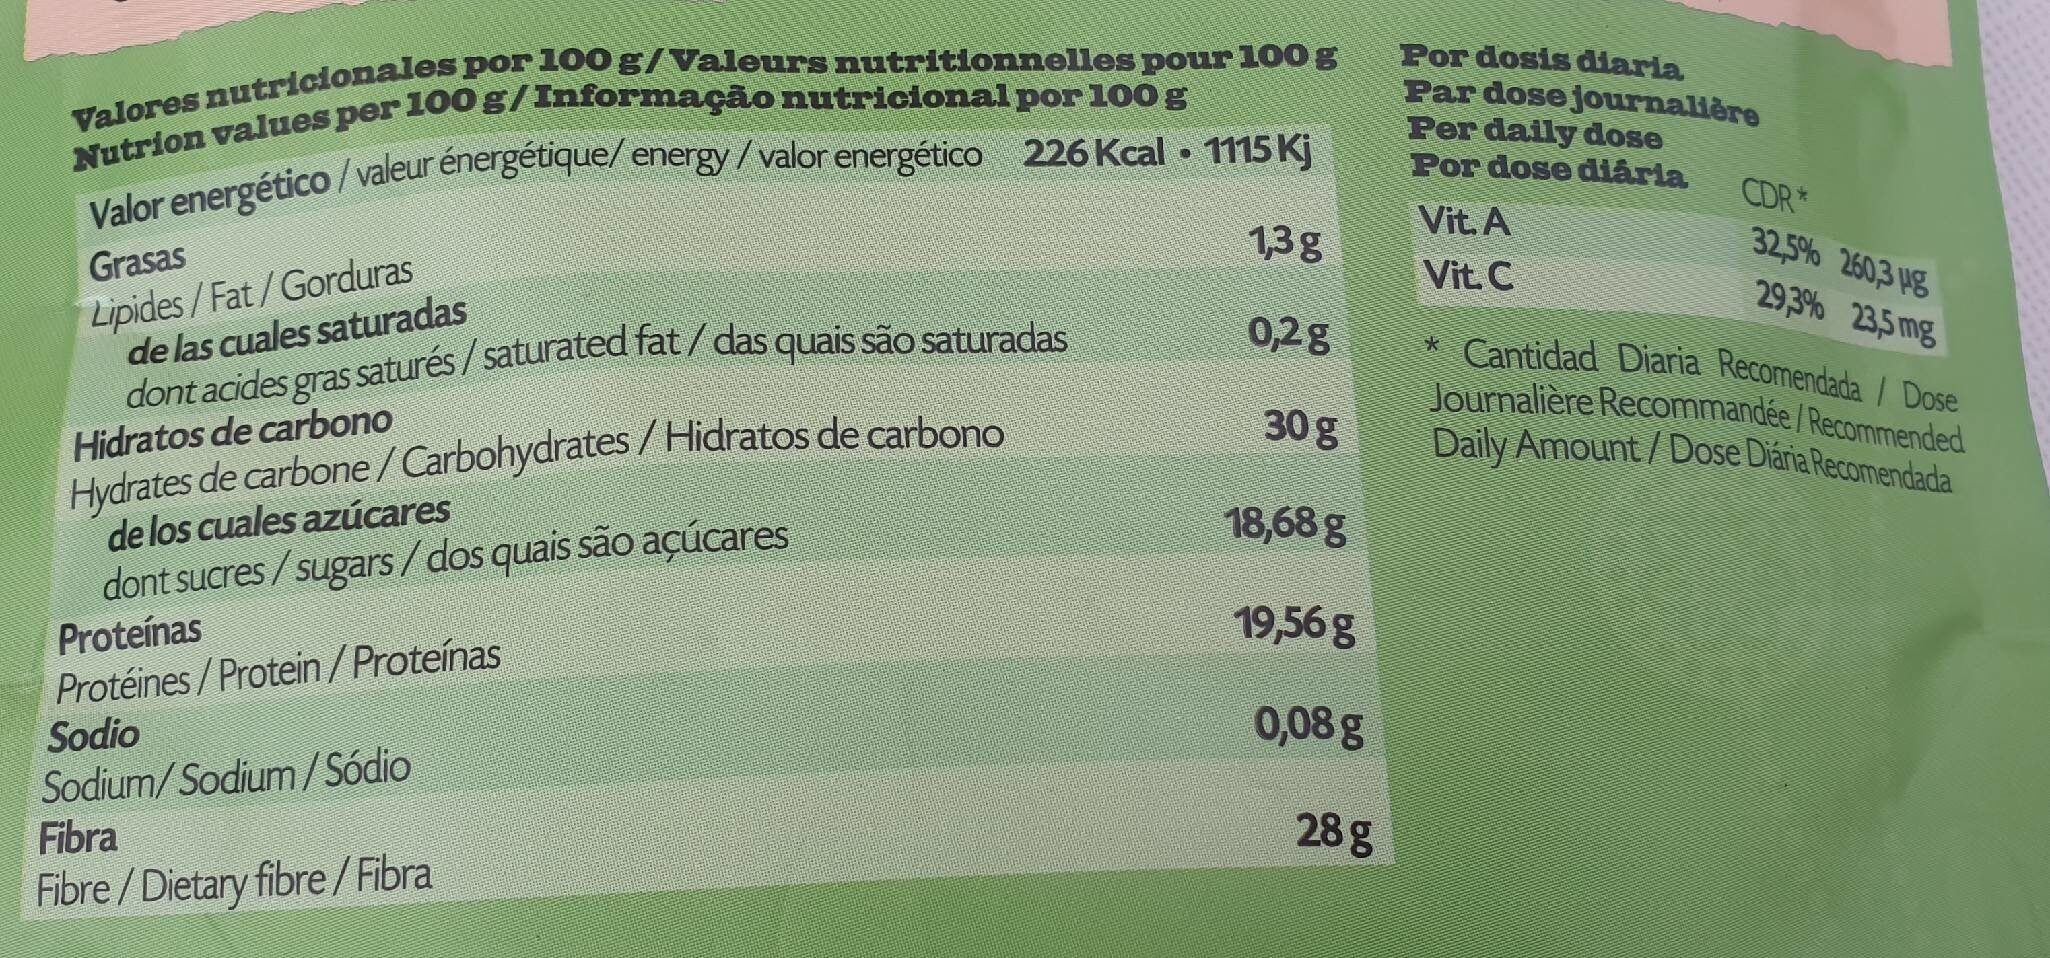 Hierba de trigo ecológica - Nutrition facts - fr